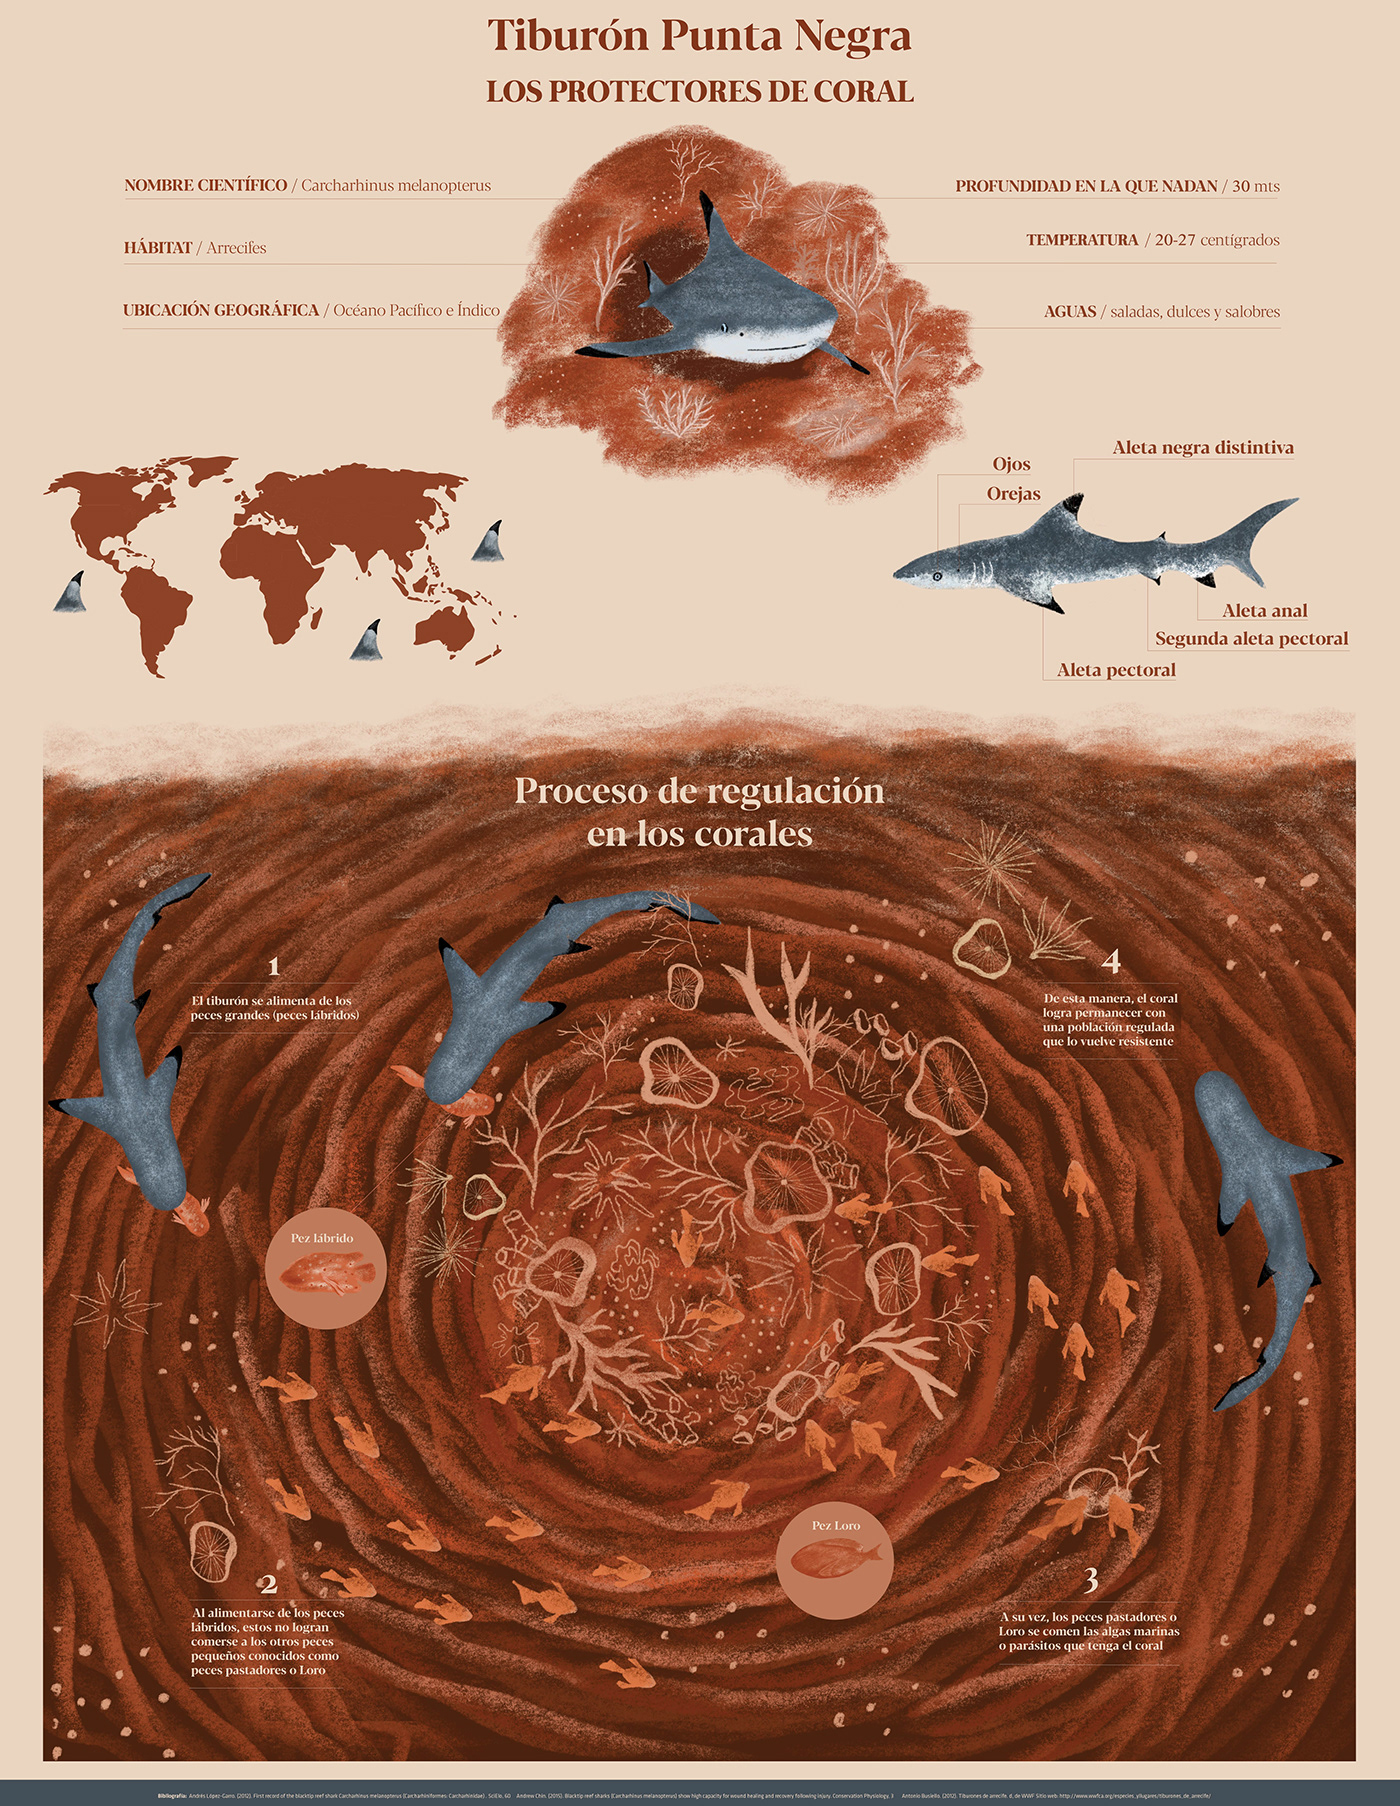 conceptual illustration ILLUSTRATION  infographic sharks illustration